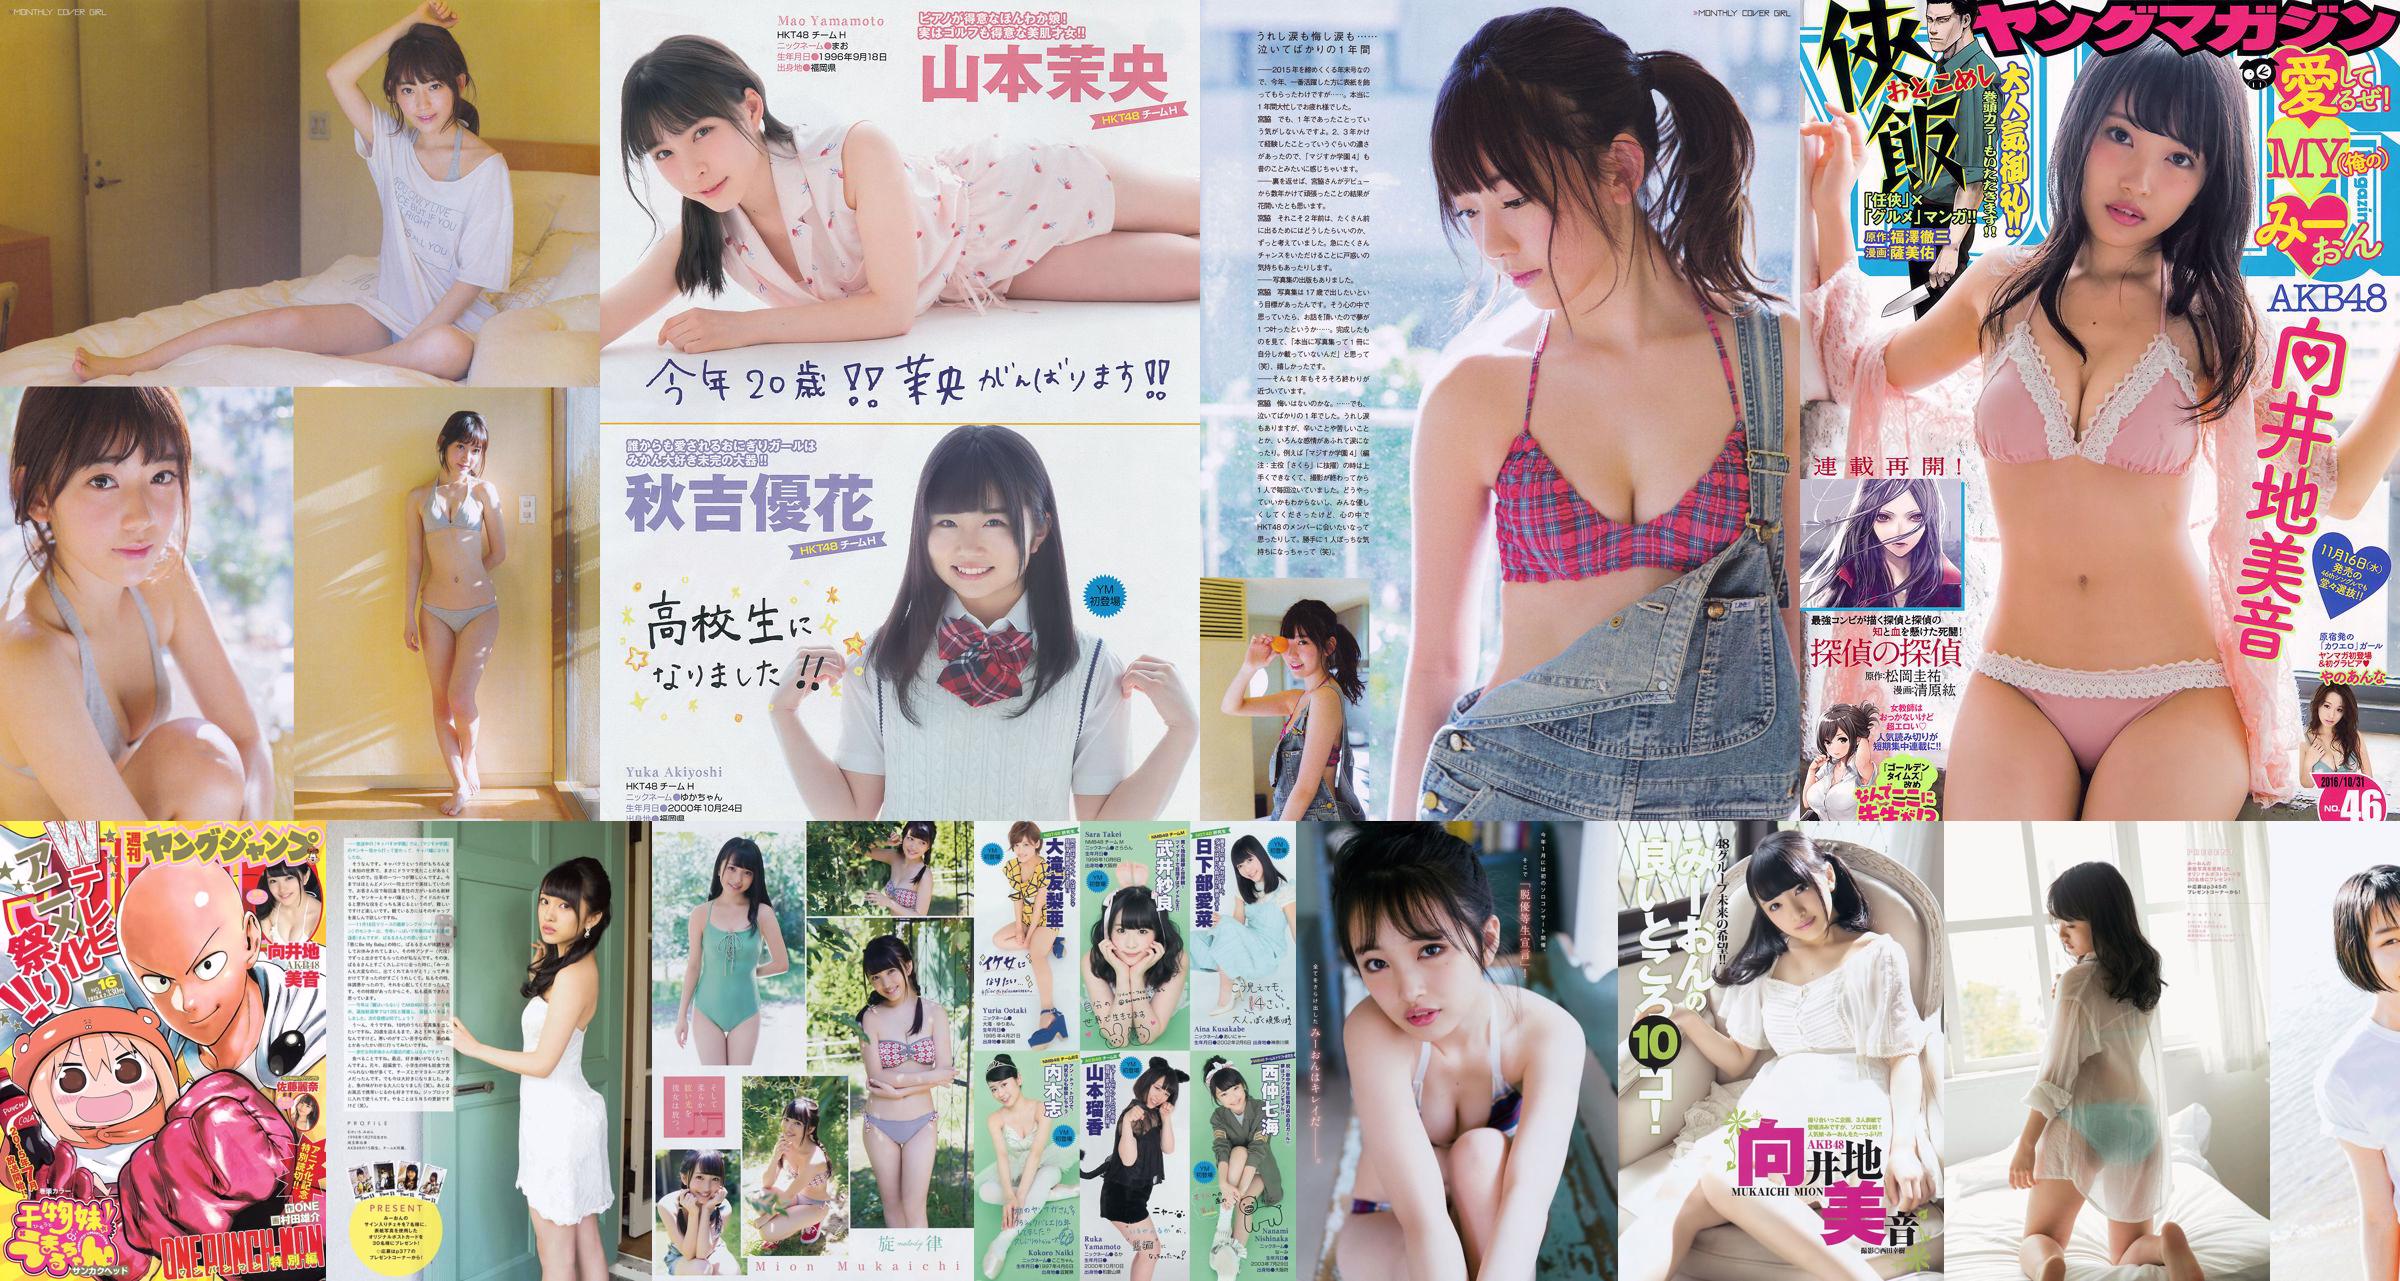 [Young Magazine] Mion Mukaichi Anna Yano 2016 Photographie n ° 46 No.f41452 Page 4